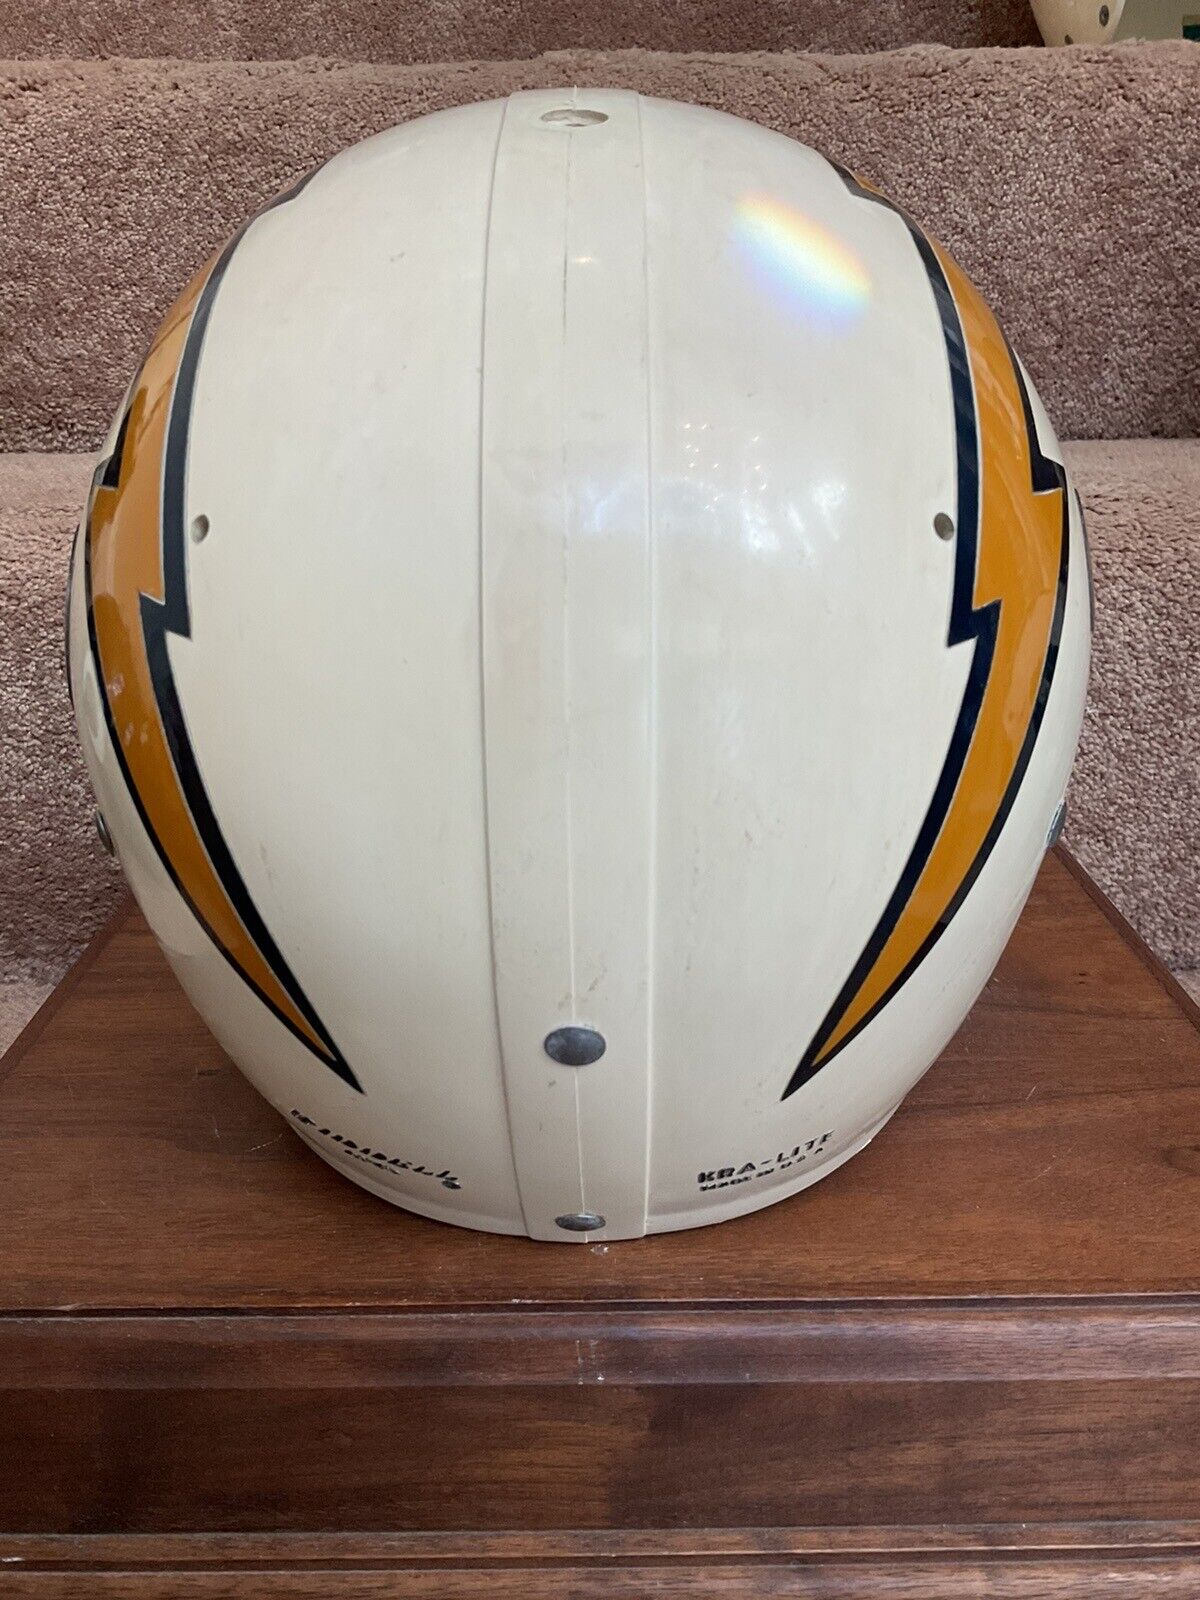 Original Riddell 1971 San Diego Chargers Kra-Lite TK2 Game Football Helmet Rare Sports Mem, Cards & Fan Shop:Fan Apparel & Souvenirs:Football-NFL Riddell   